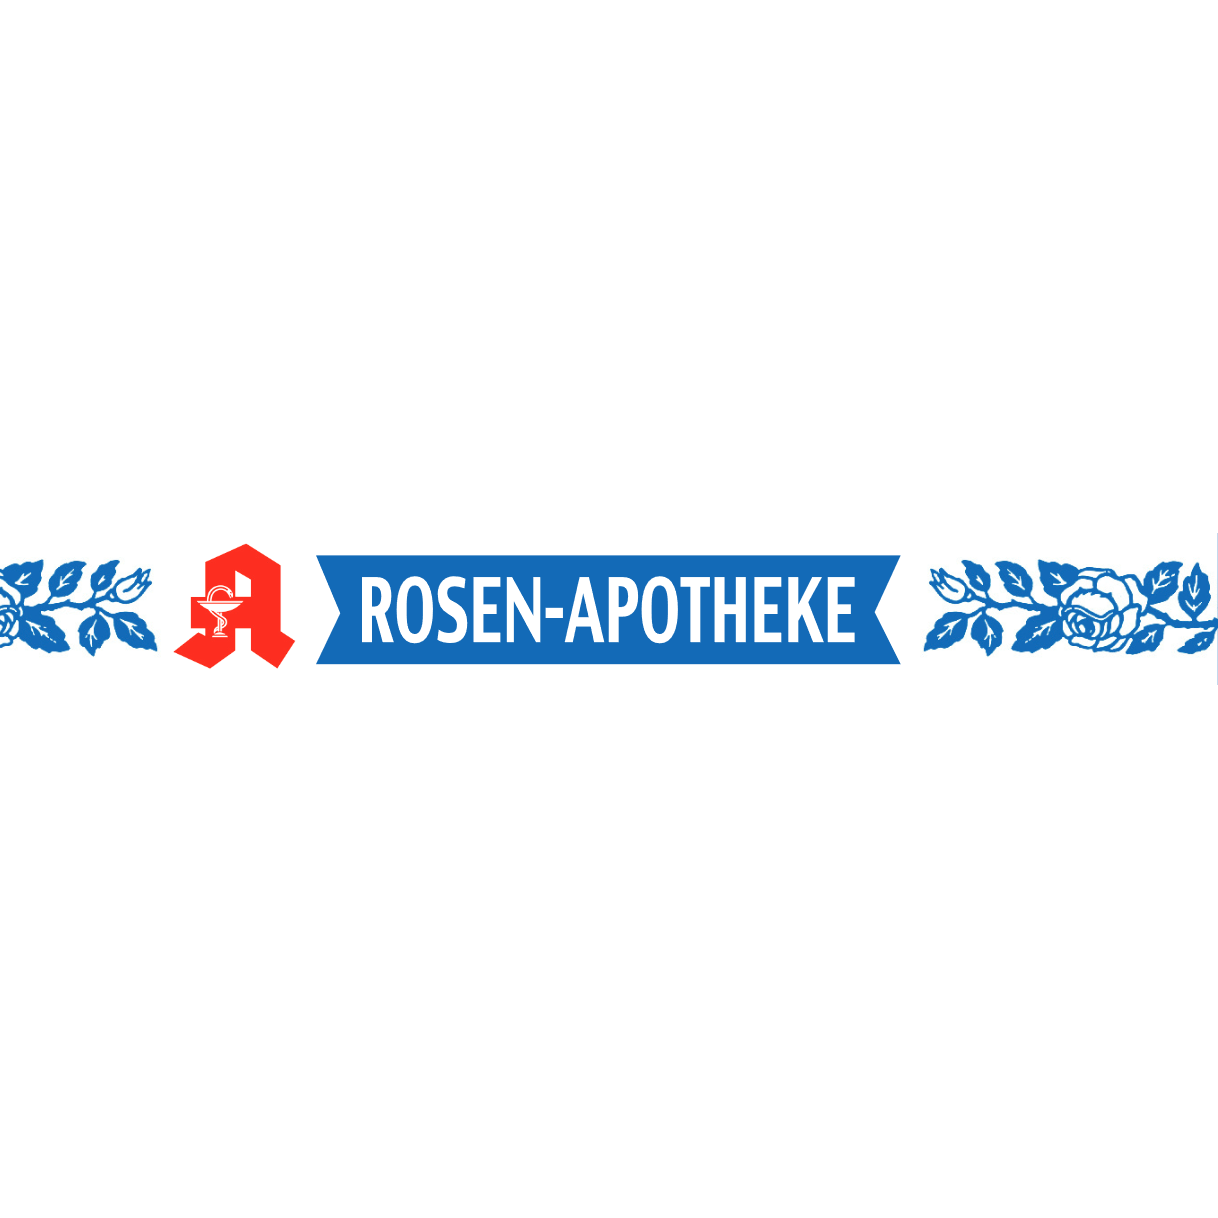 Rosen-Apotheke in Waldfeucht - Logo